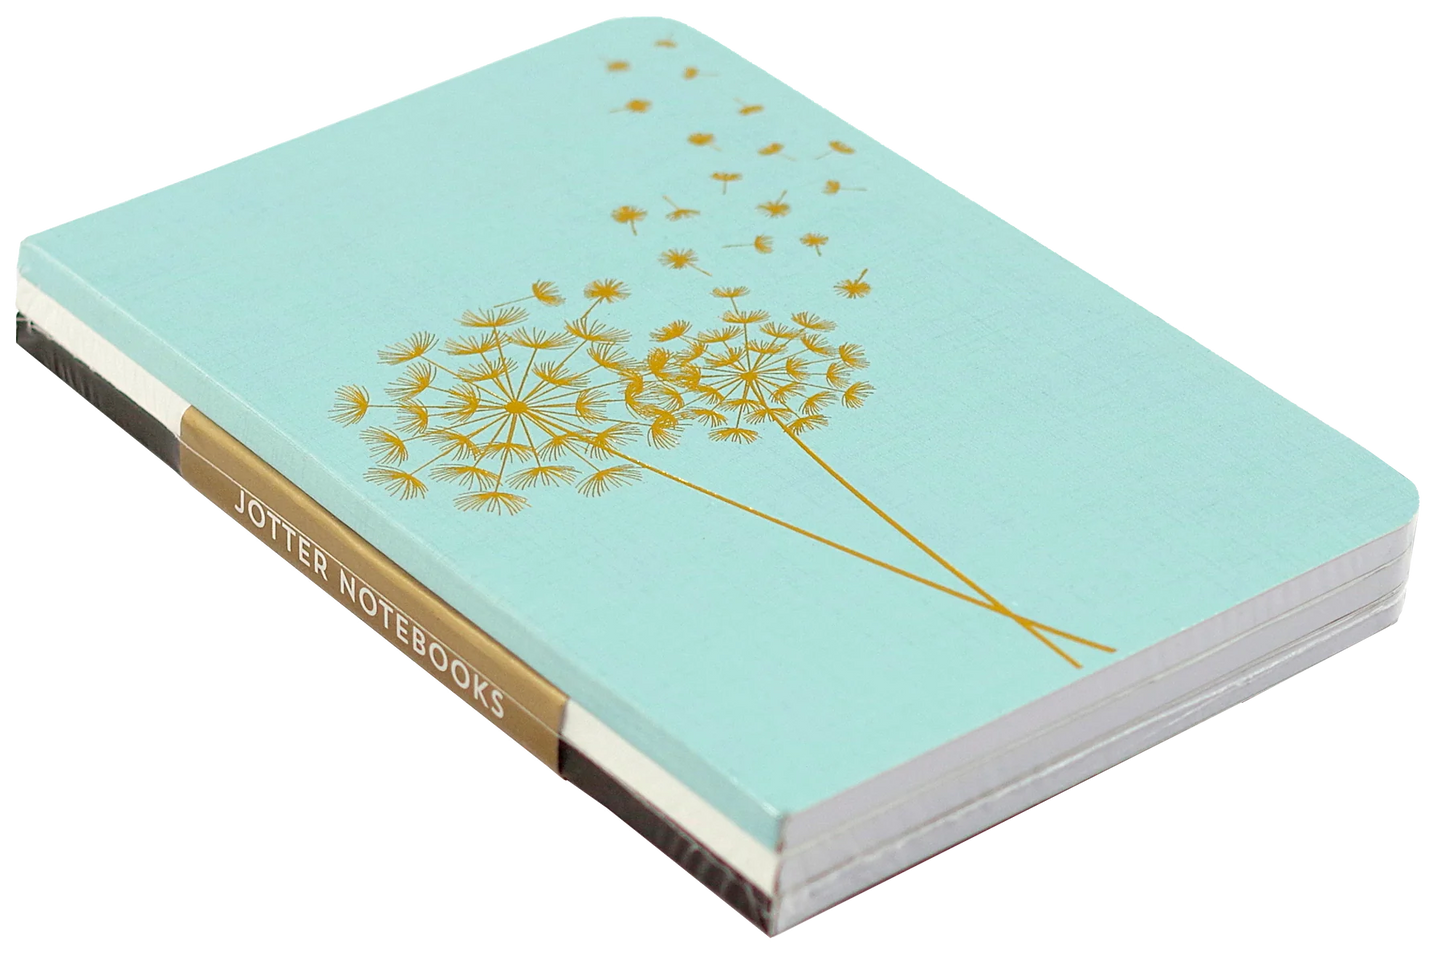 Jotter Mini Notebook Set: Dandelion Wishes - The Silver Dahlia